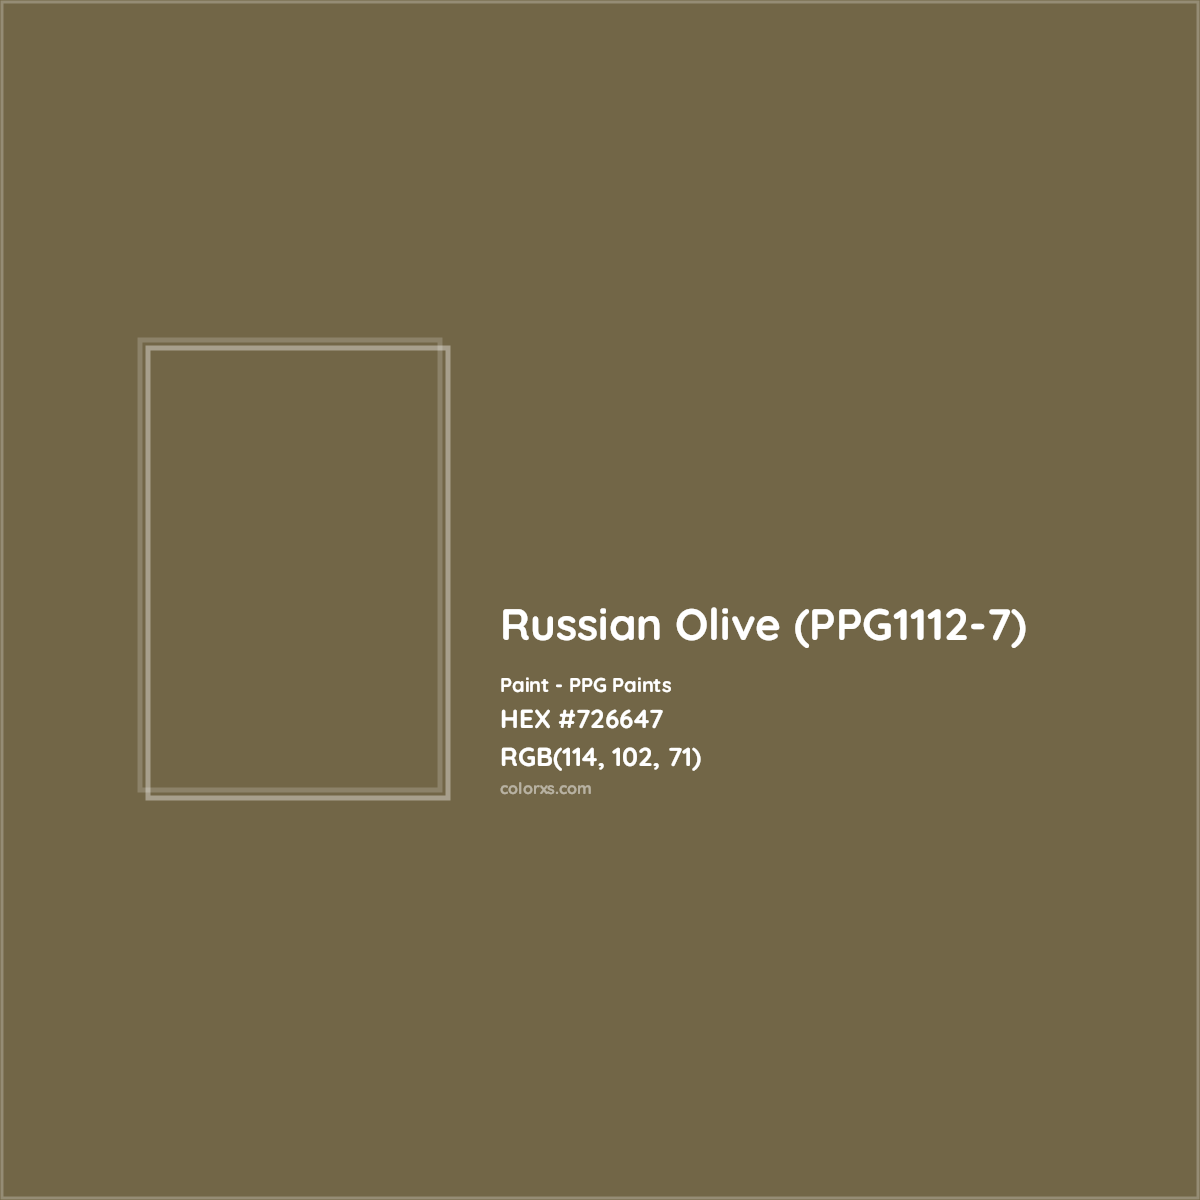 HEX #726647 Russian Olive (PPG1112-7) Paint PPG Paints - Color Code